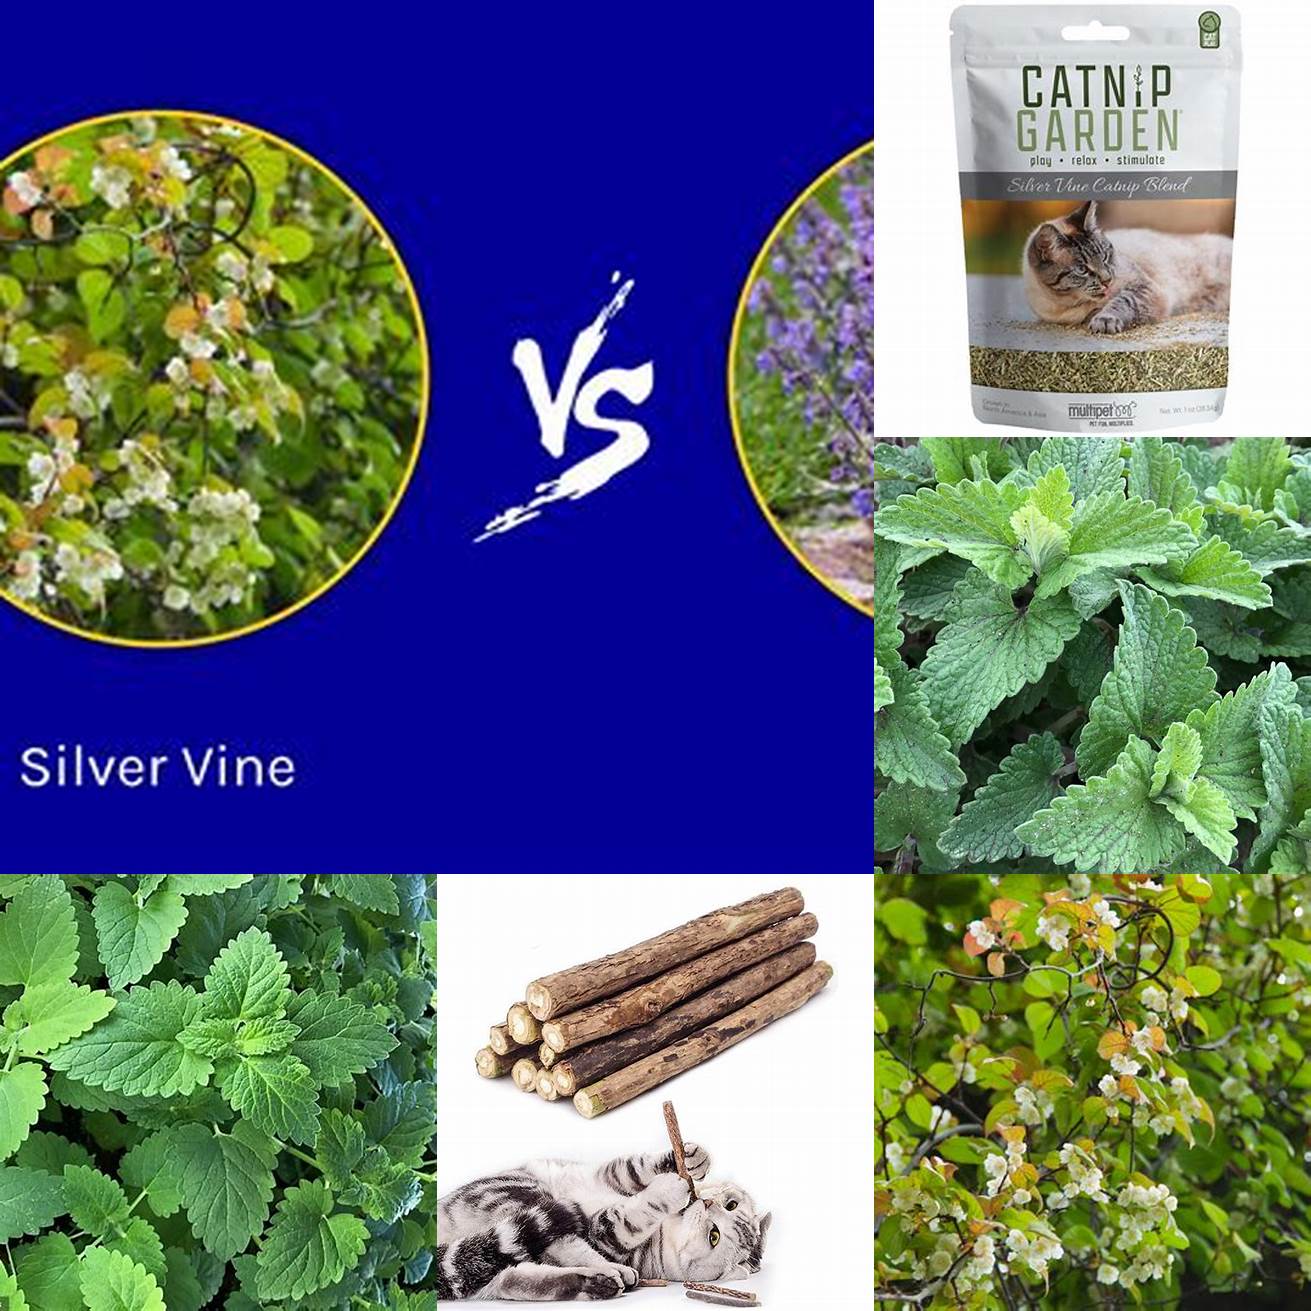 Catnip or silver vine